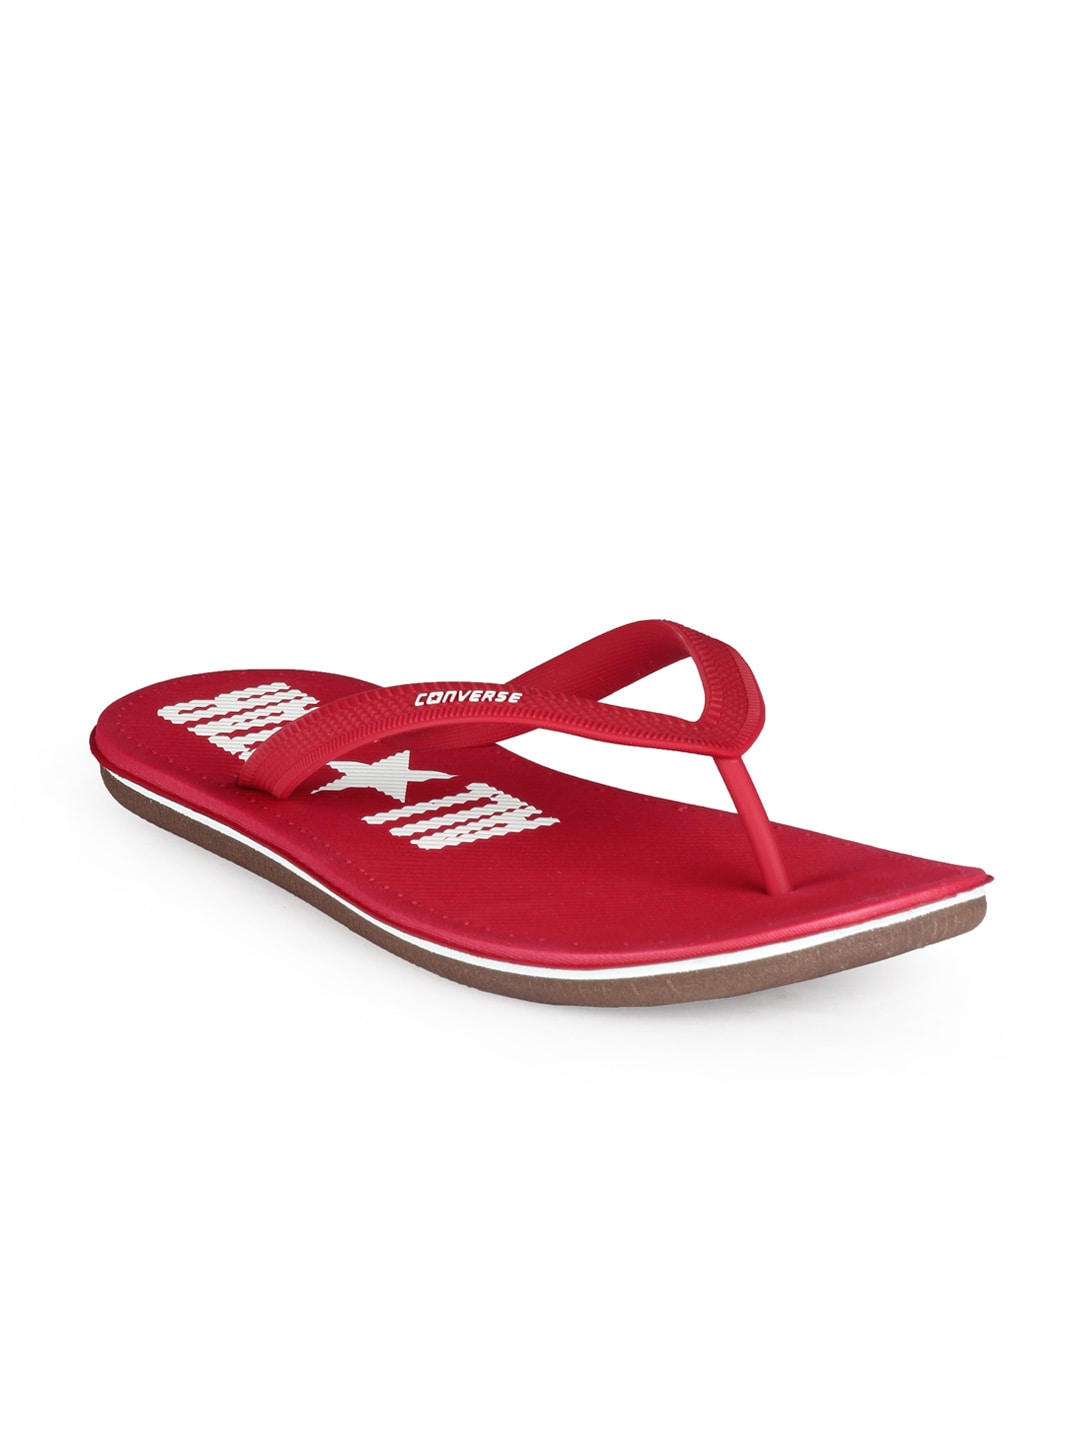 Converse Unisex Red Flip Flops